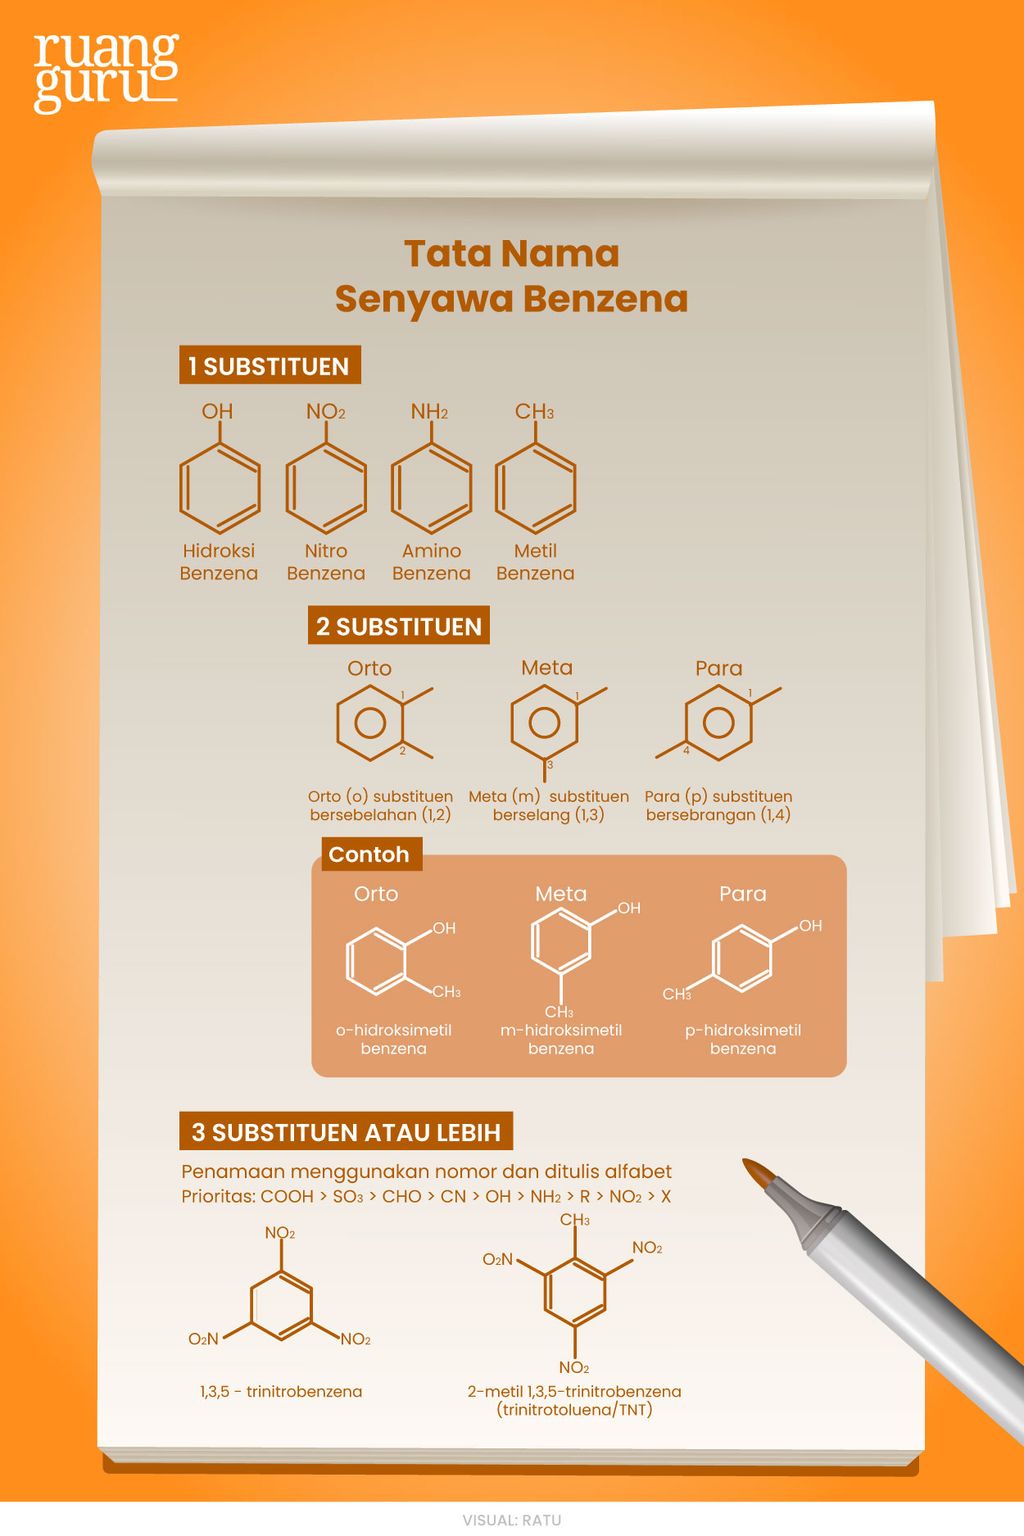 Tata nama senyawa benzena